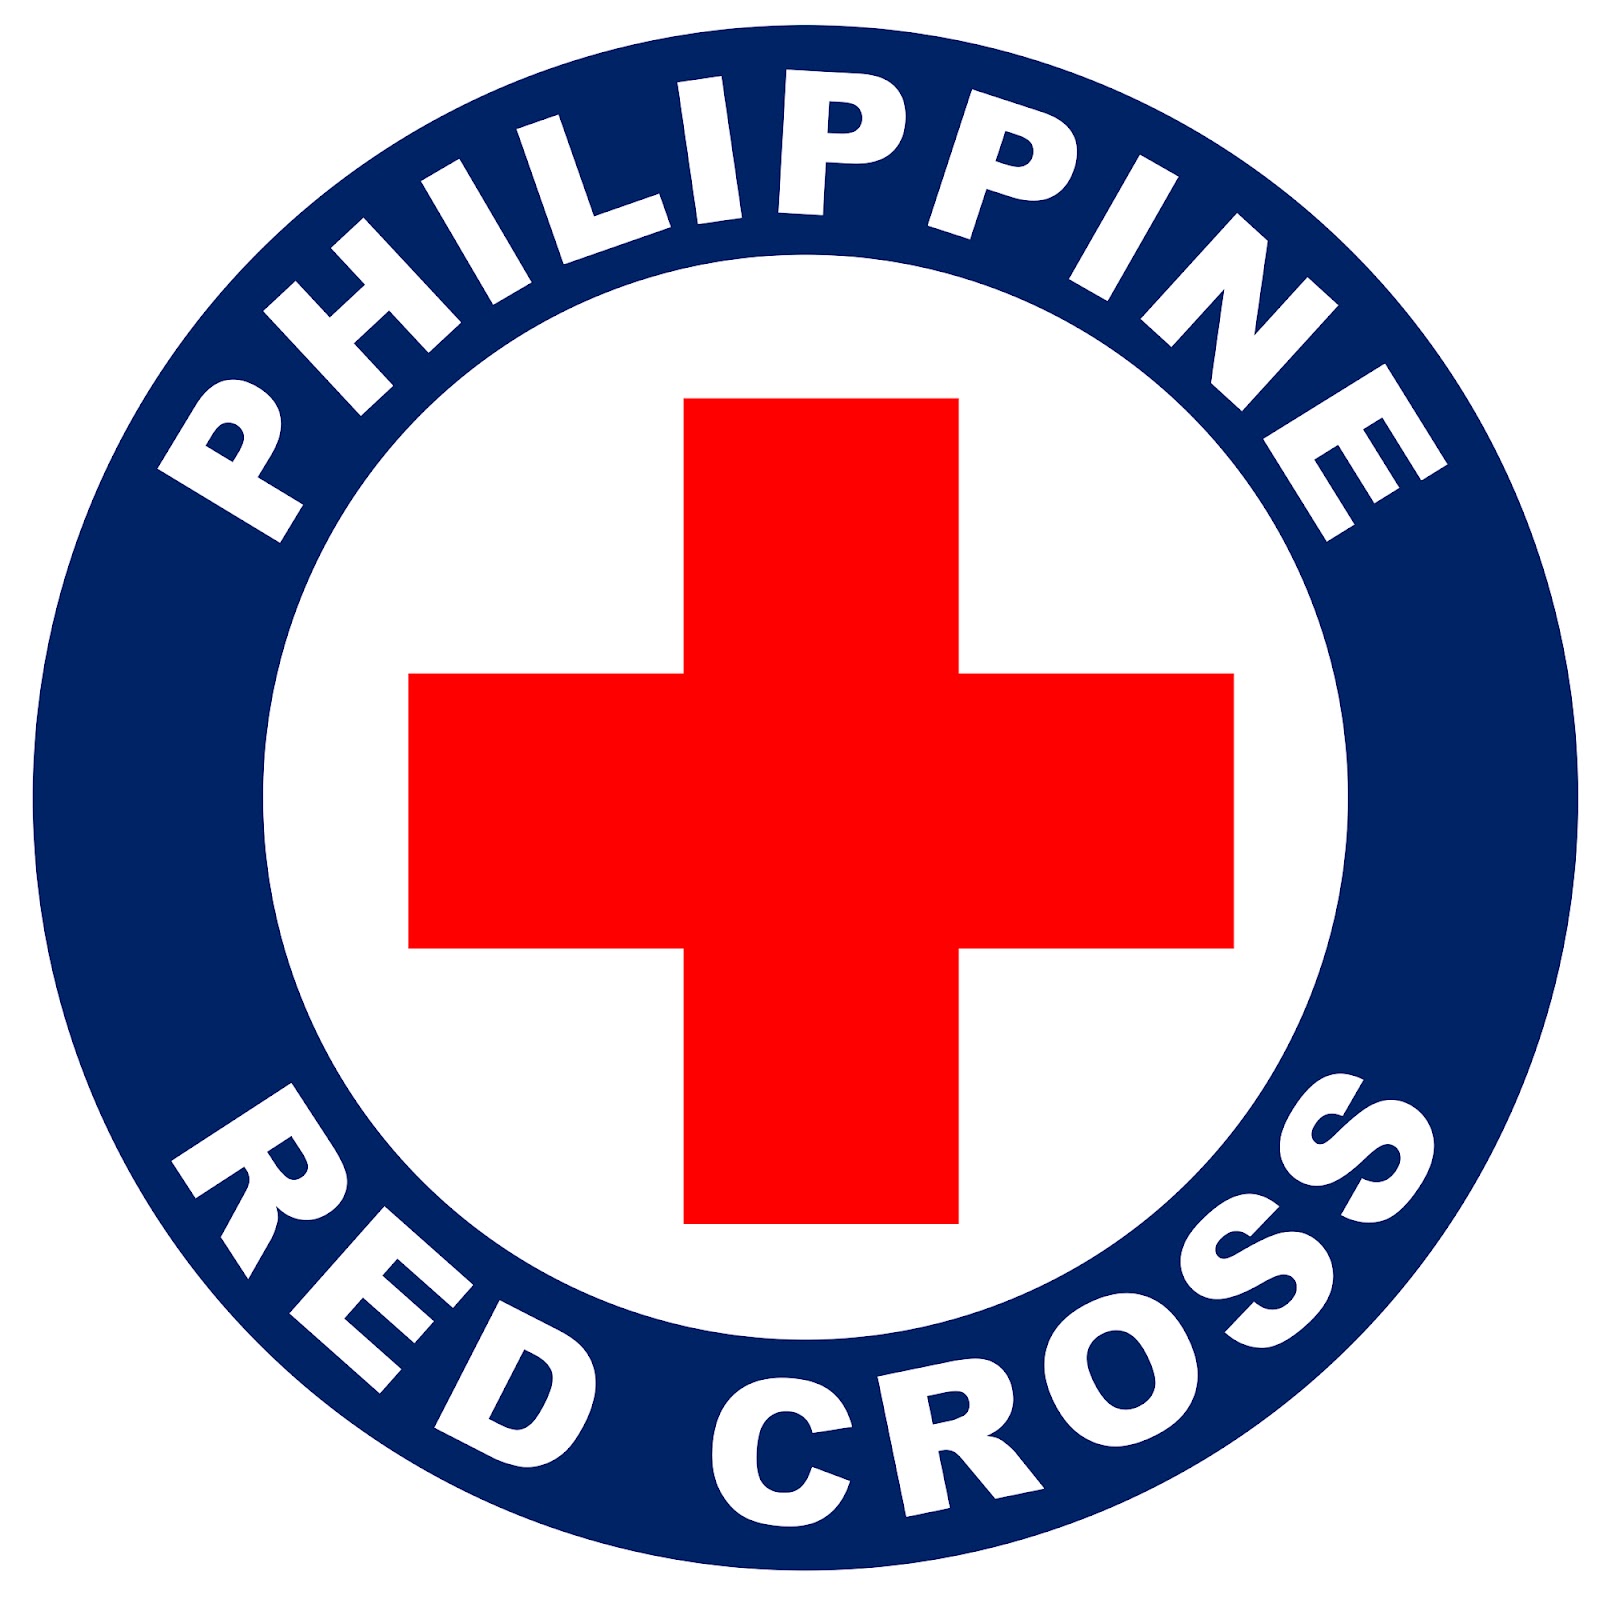 Red Cross Symbol   Clipart Best